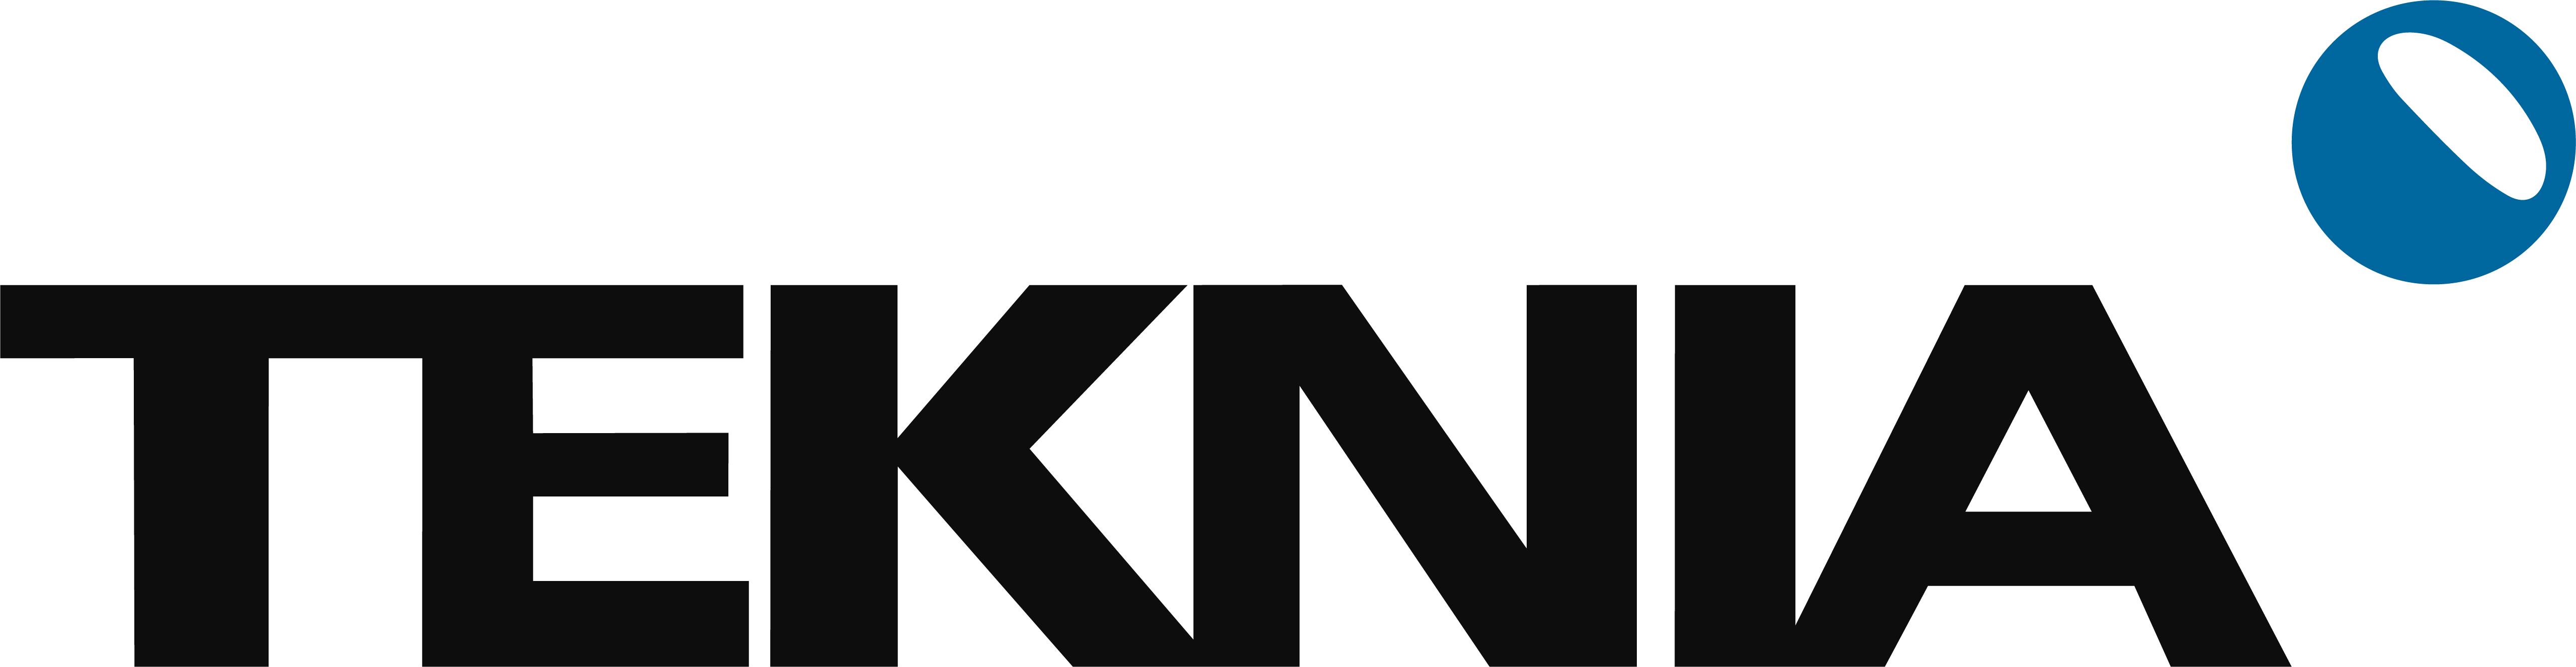 logo Teknia 